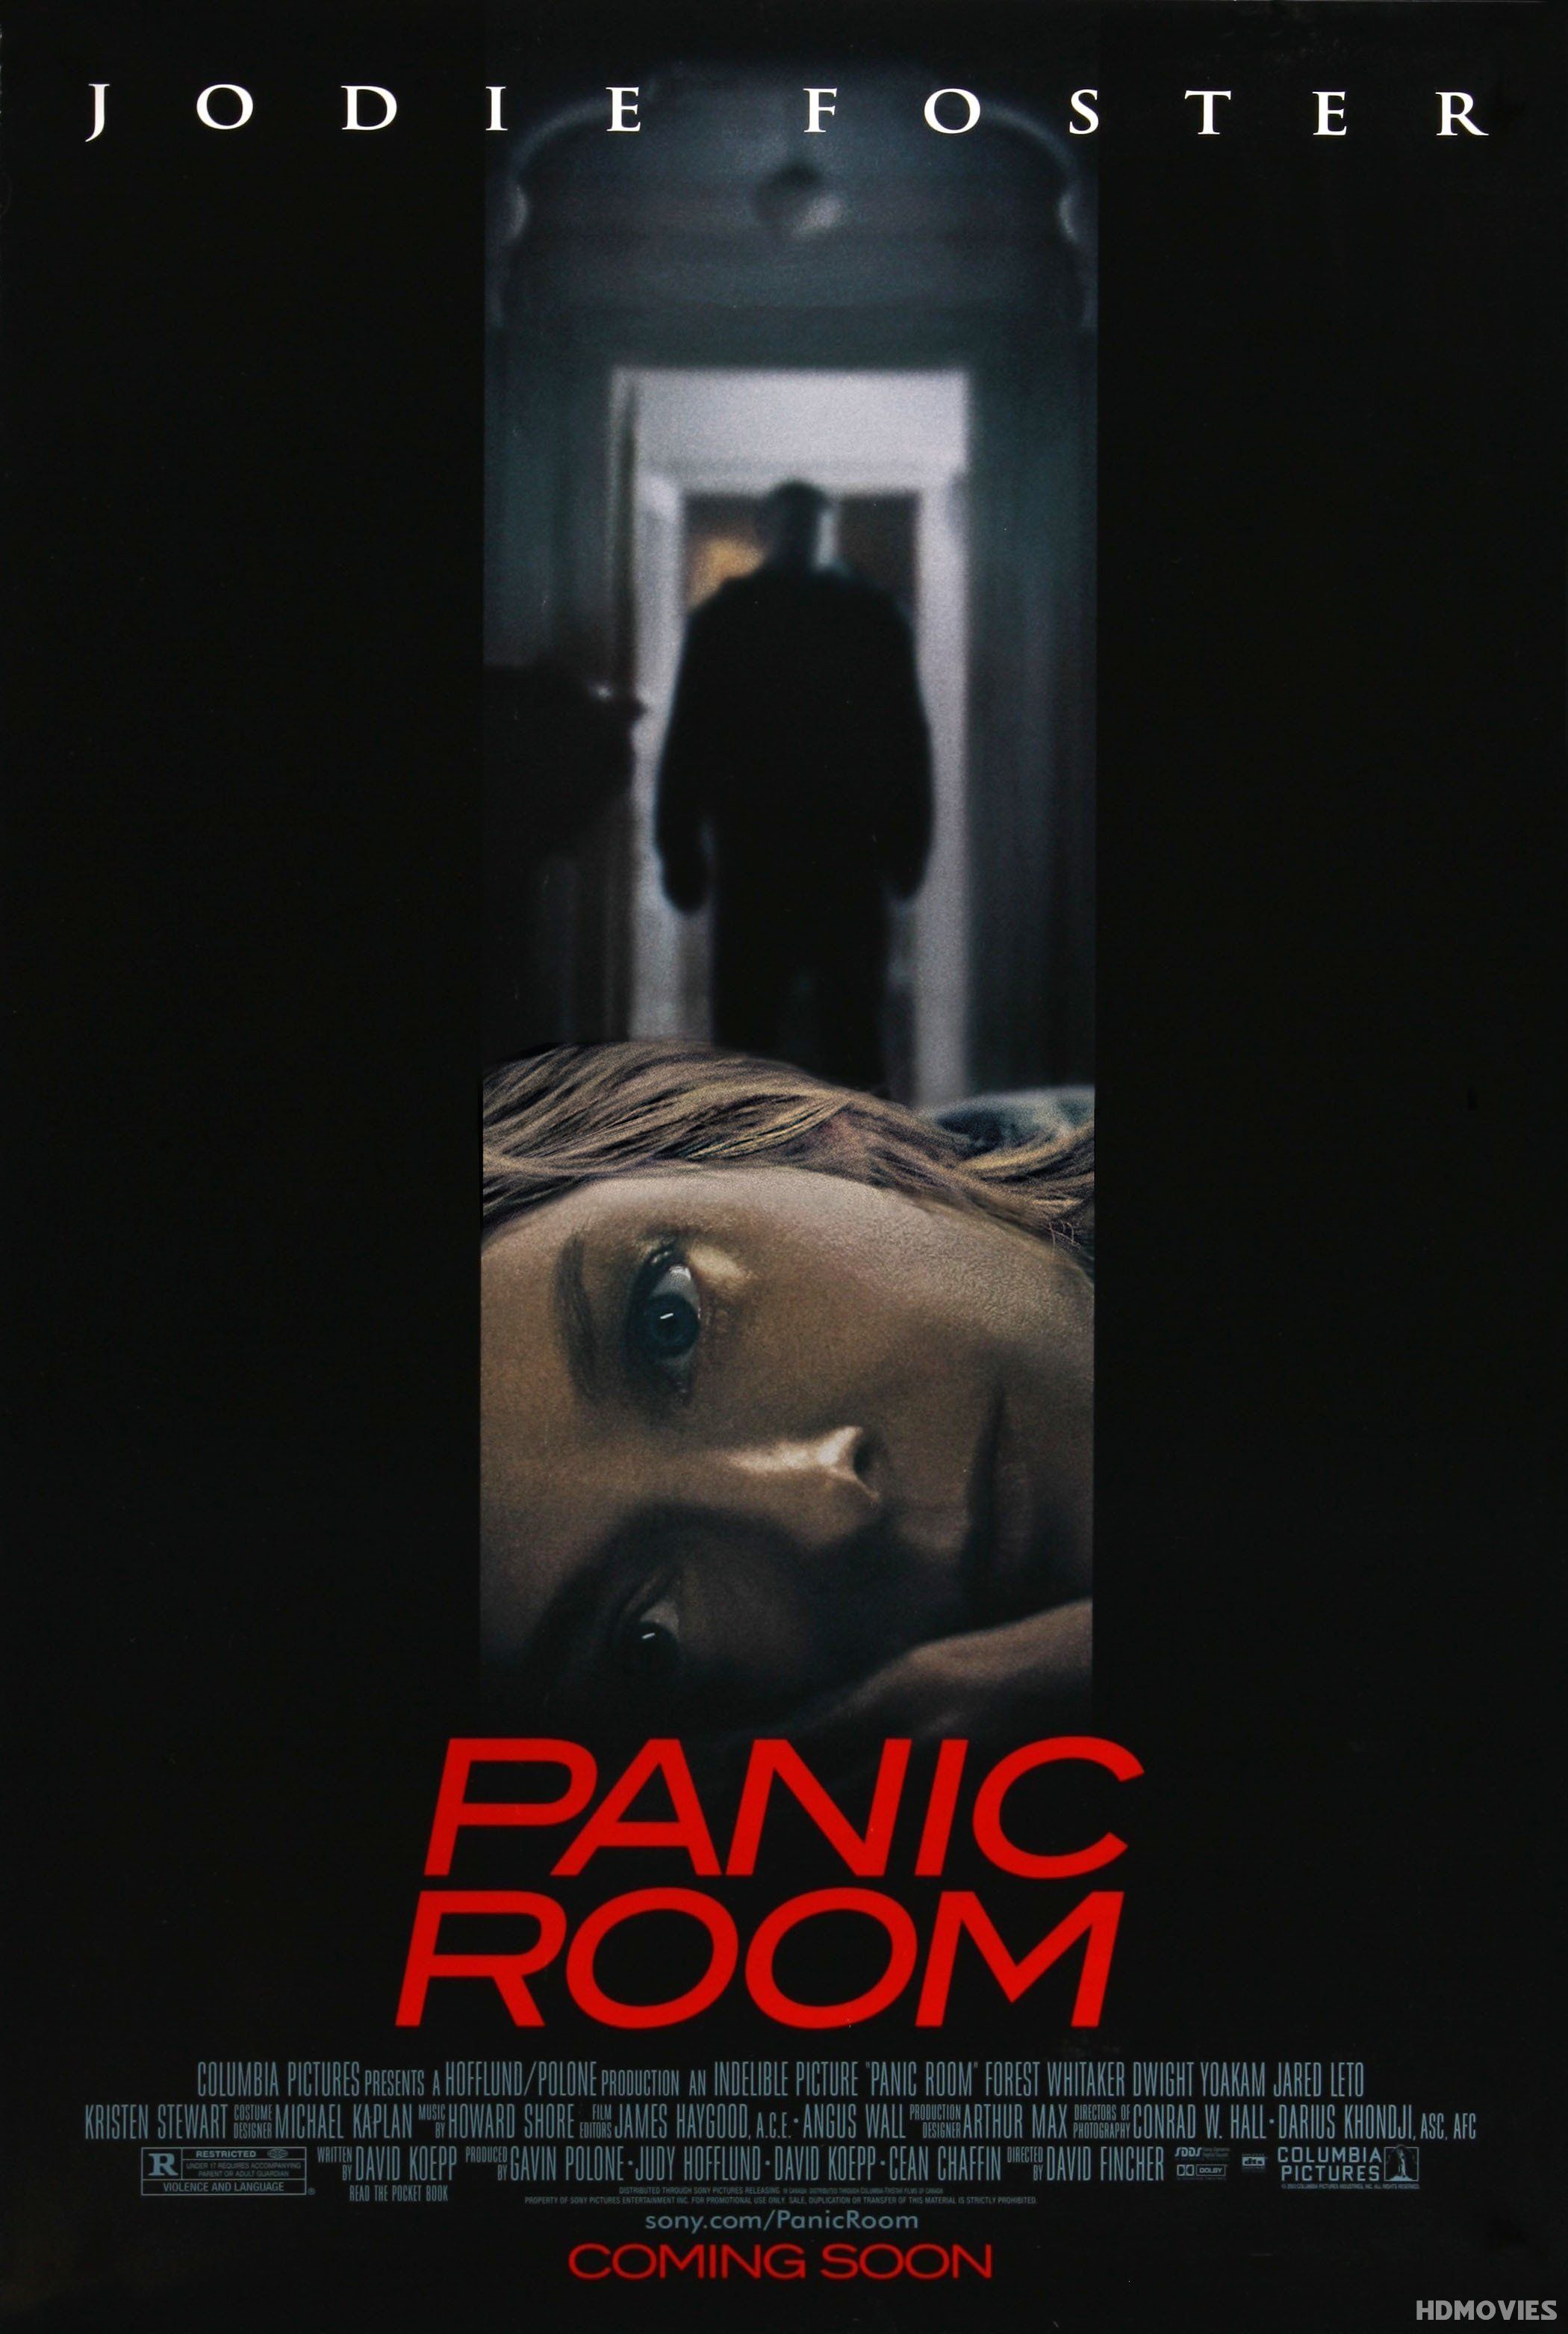 Panic Room (2002) Hindi Dubbed